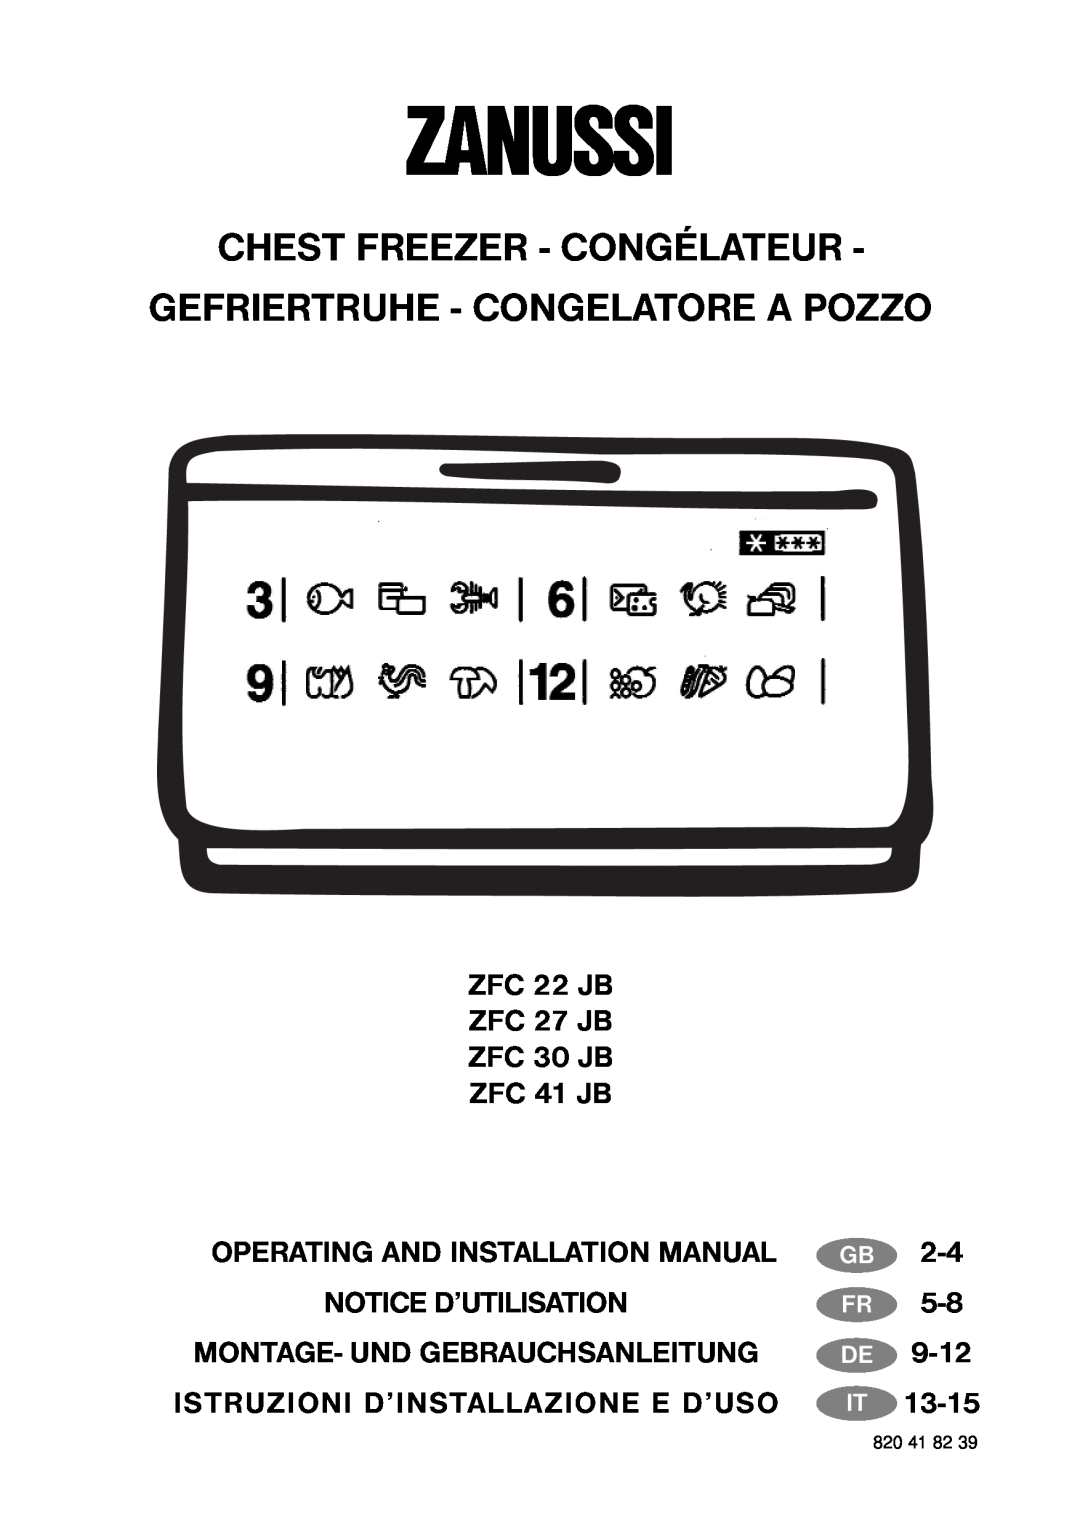 Zanussi ZFC 22 JB installation manual Zanussi, Chest Freezer - Congélateur Gefriertruhe - Congelatore A Pozzo, 9-12, 13-15 